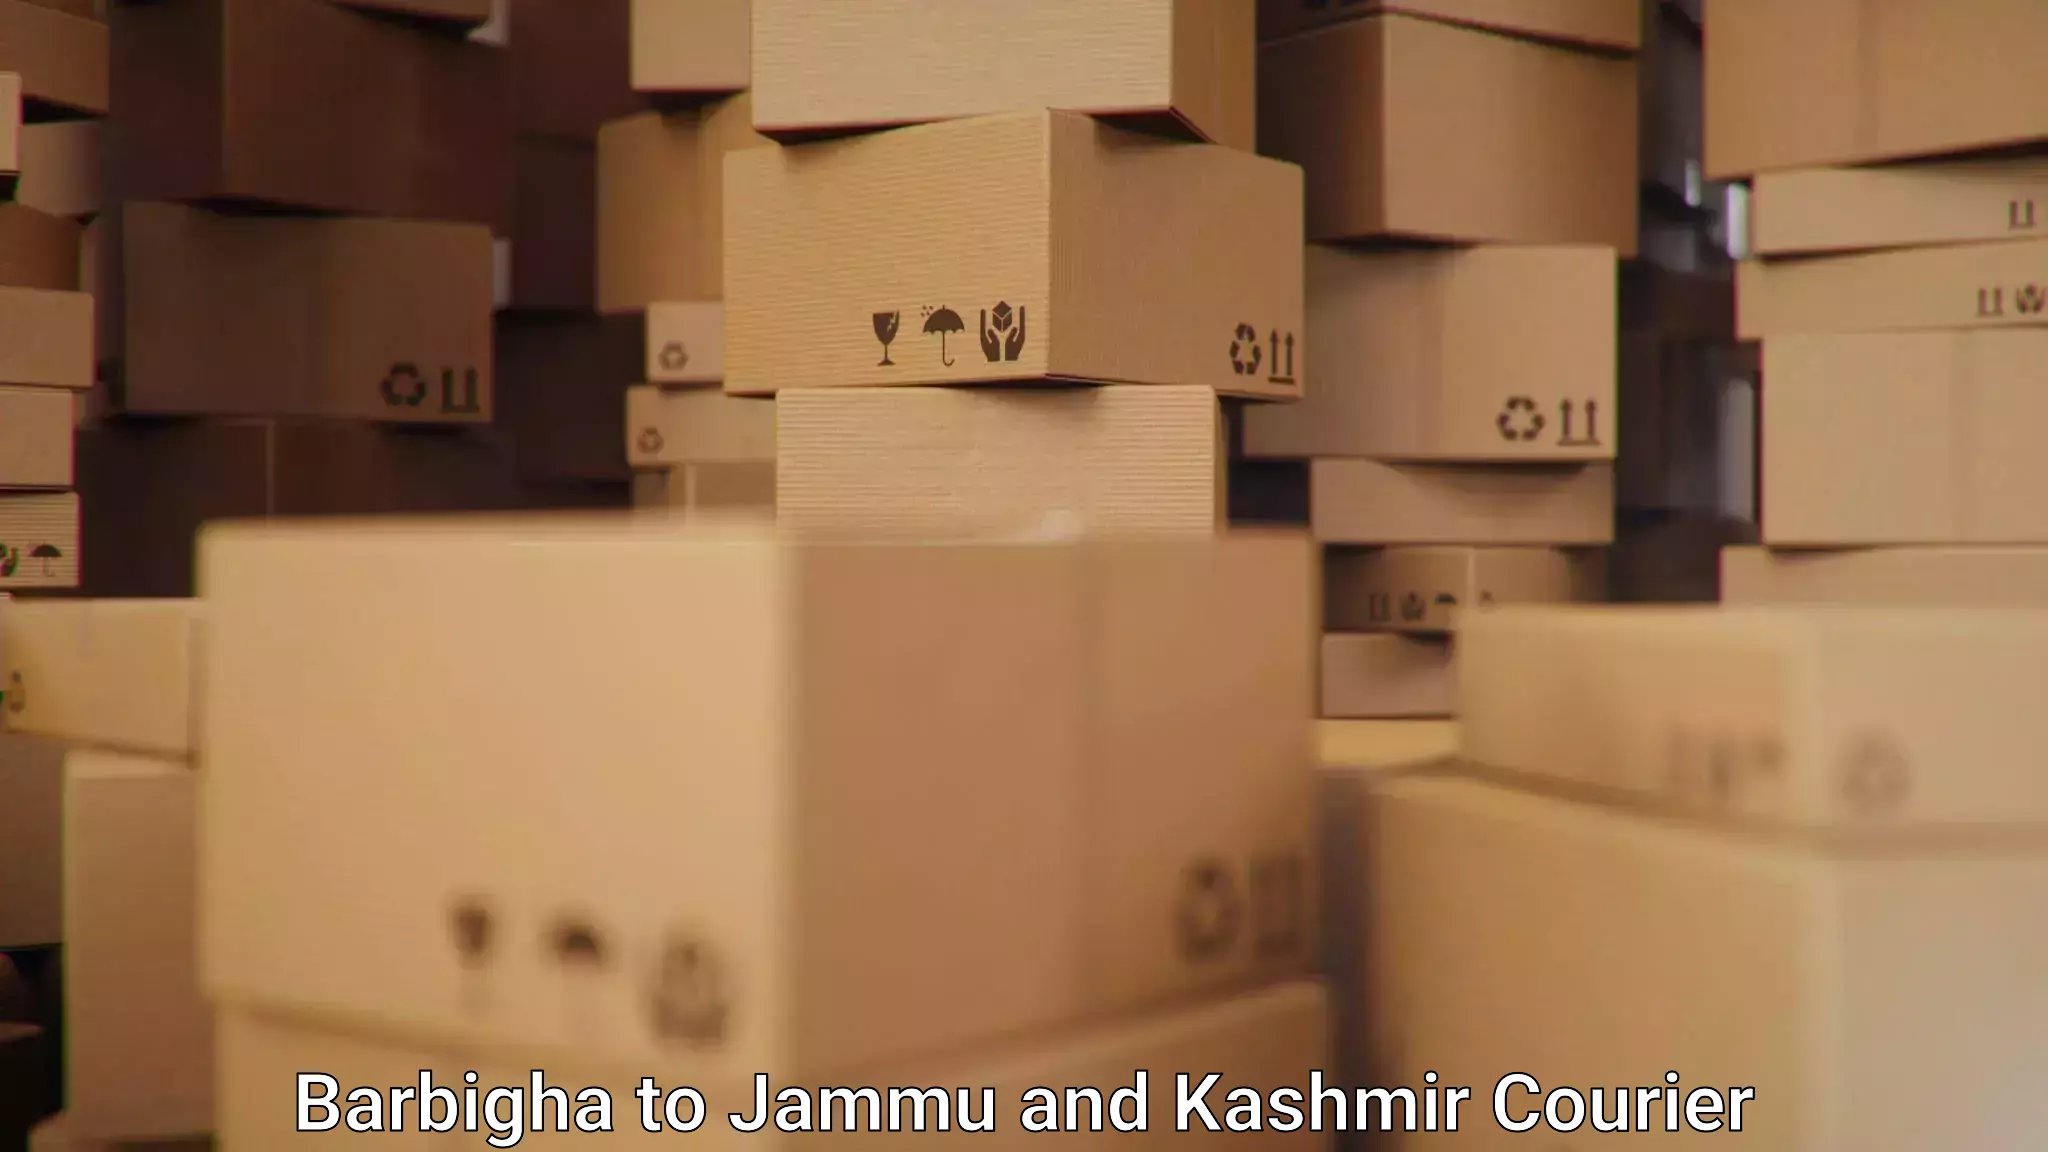 Custom courier packaging Barbigha to Srinagar Kashmir